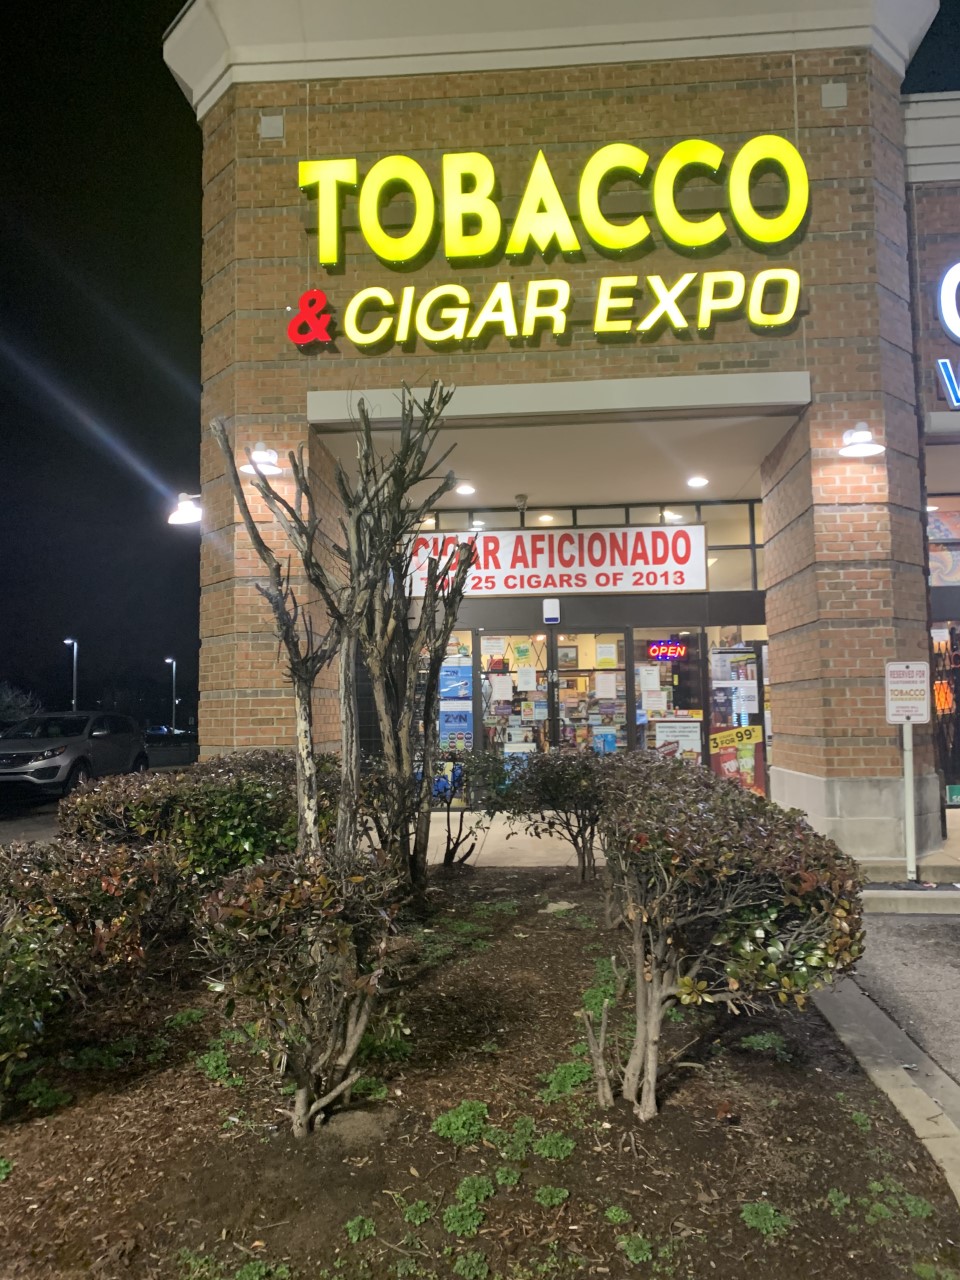 Tobacco & Cigar Expo